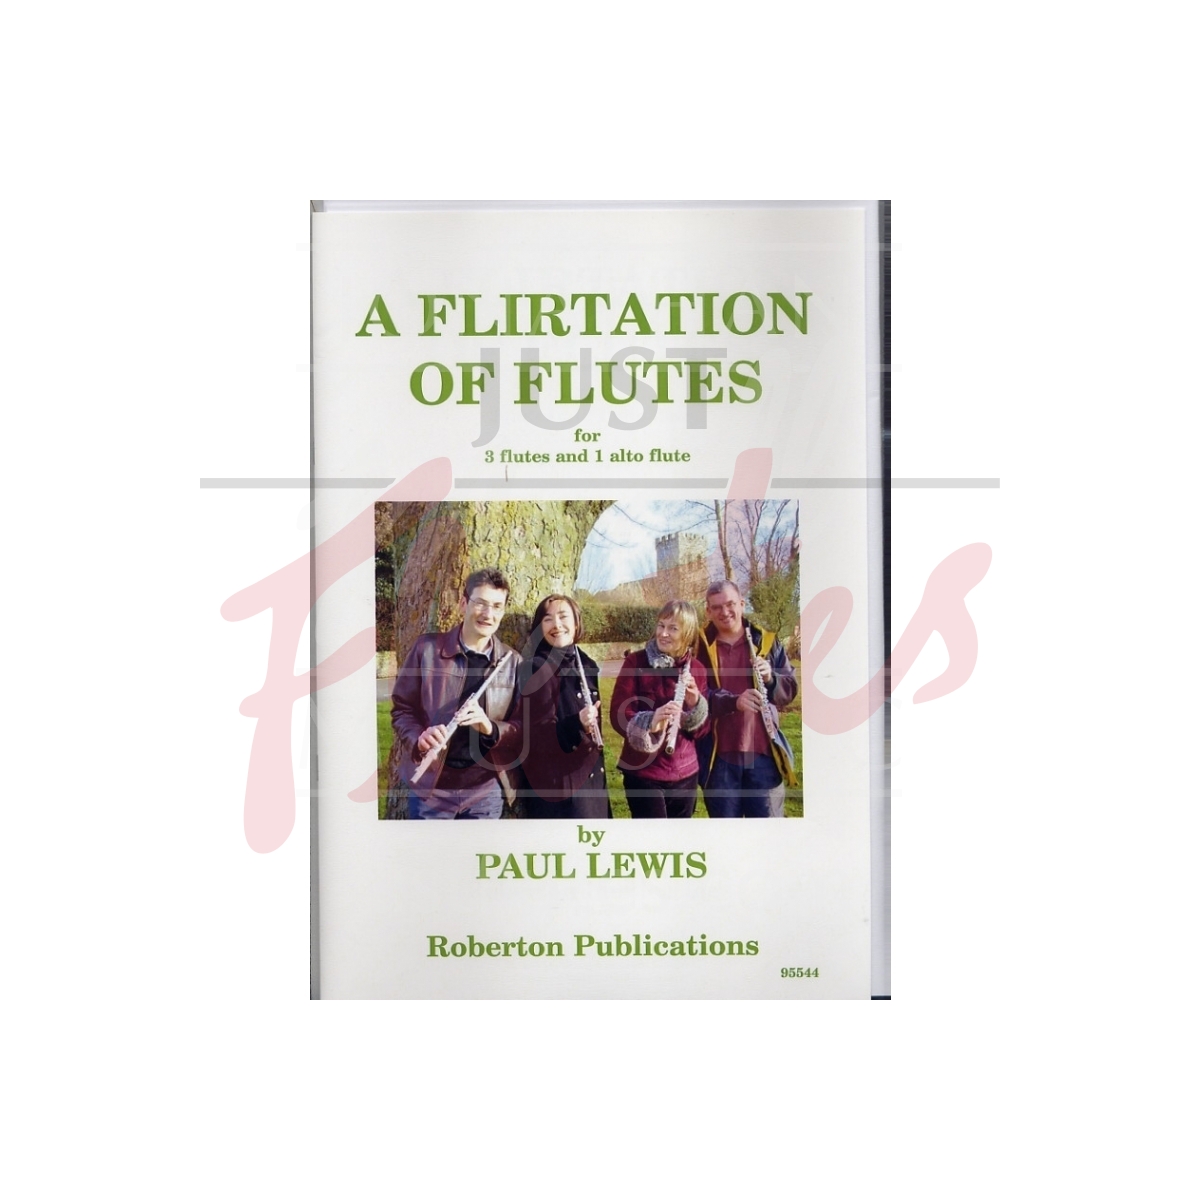 A Flirtation of Flutes